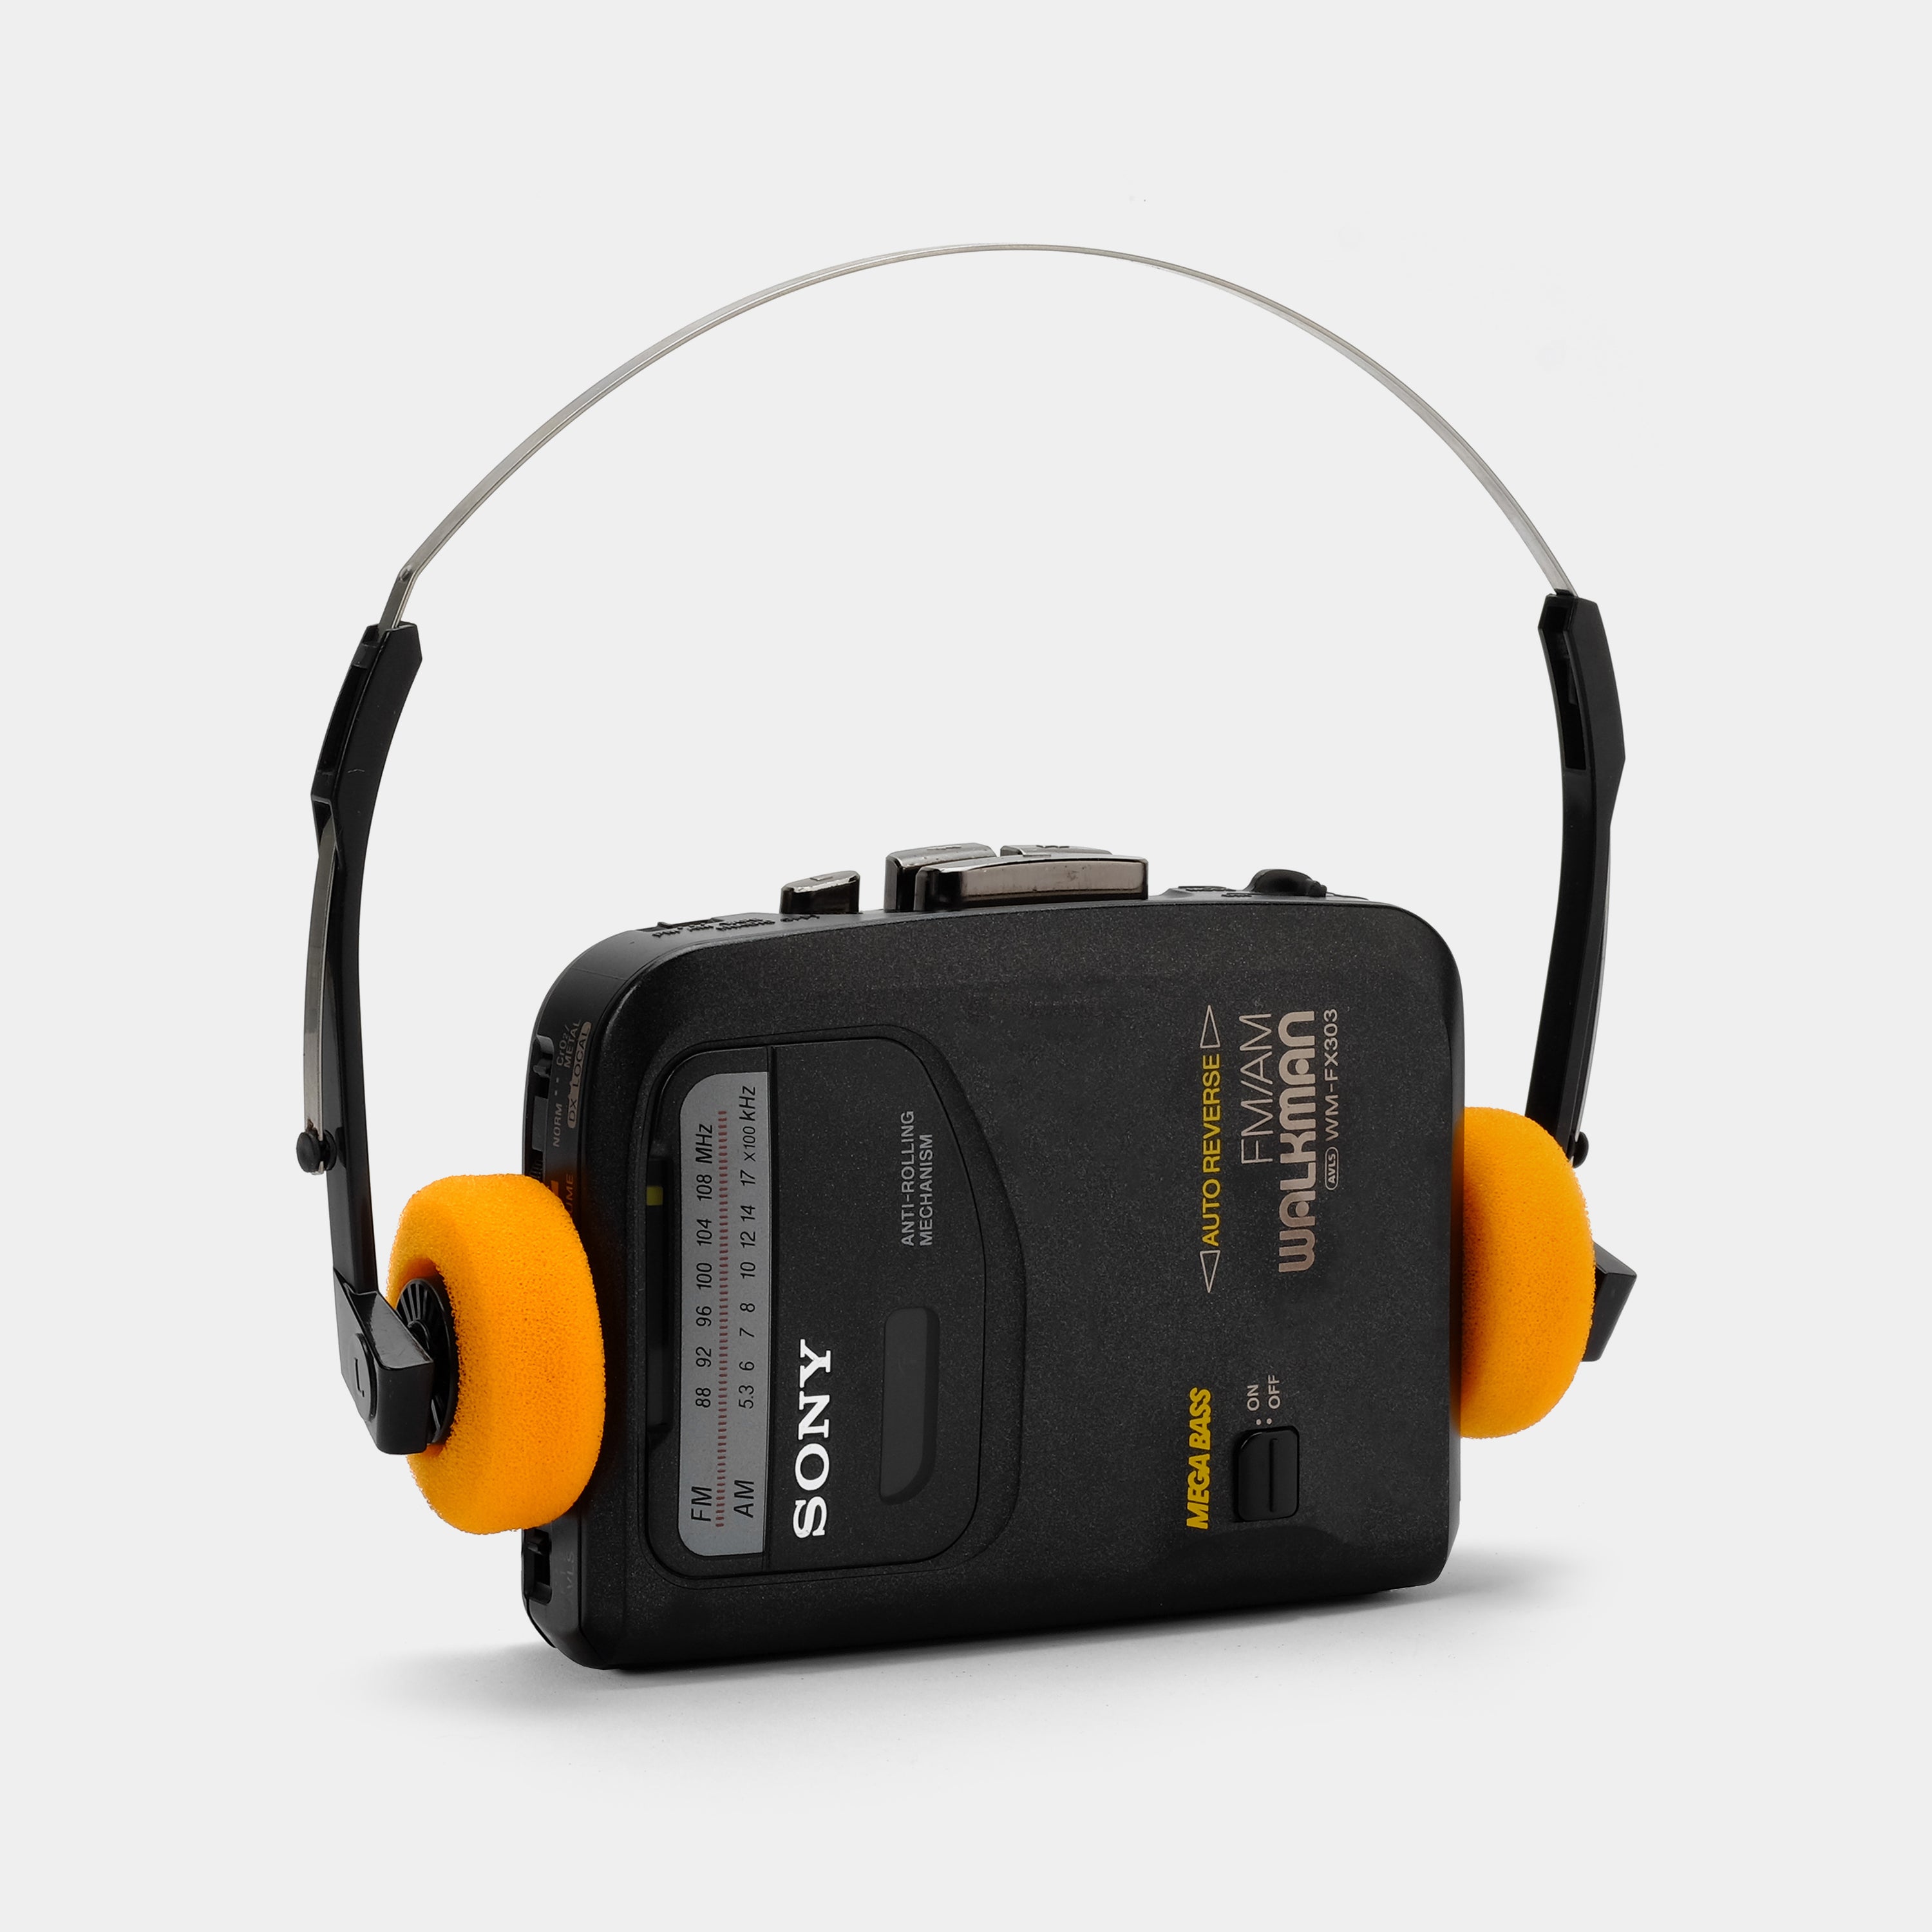 Sony Walkman WM-FX303 Auto Reverse AM/FM Portable Cassette Player